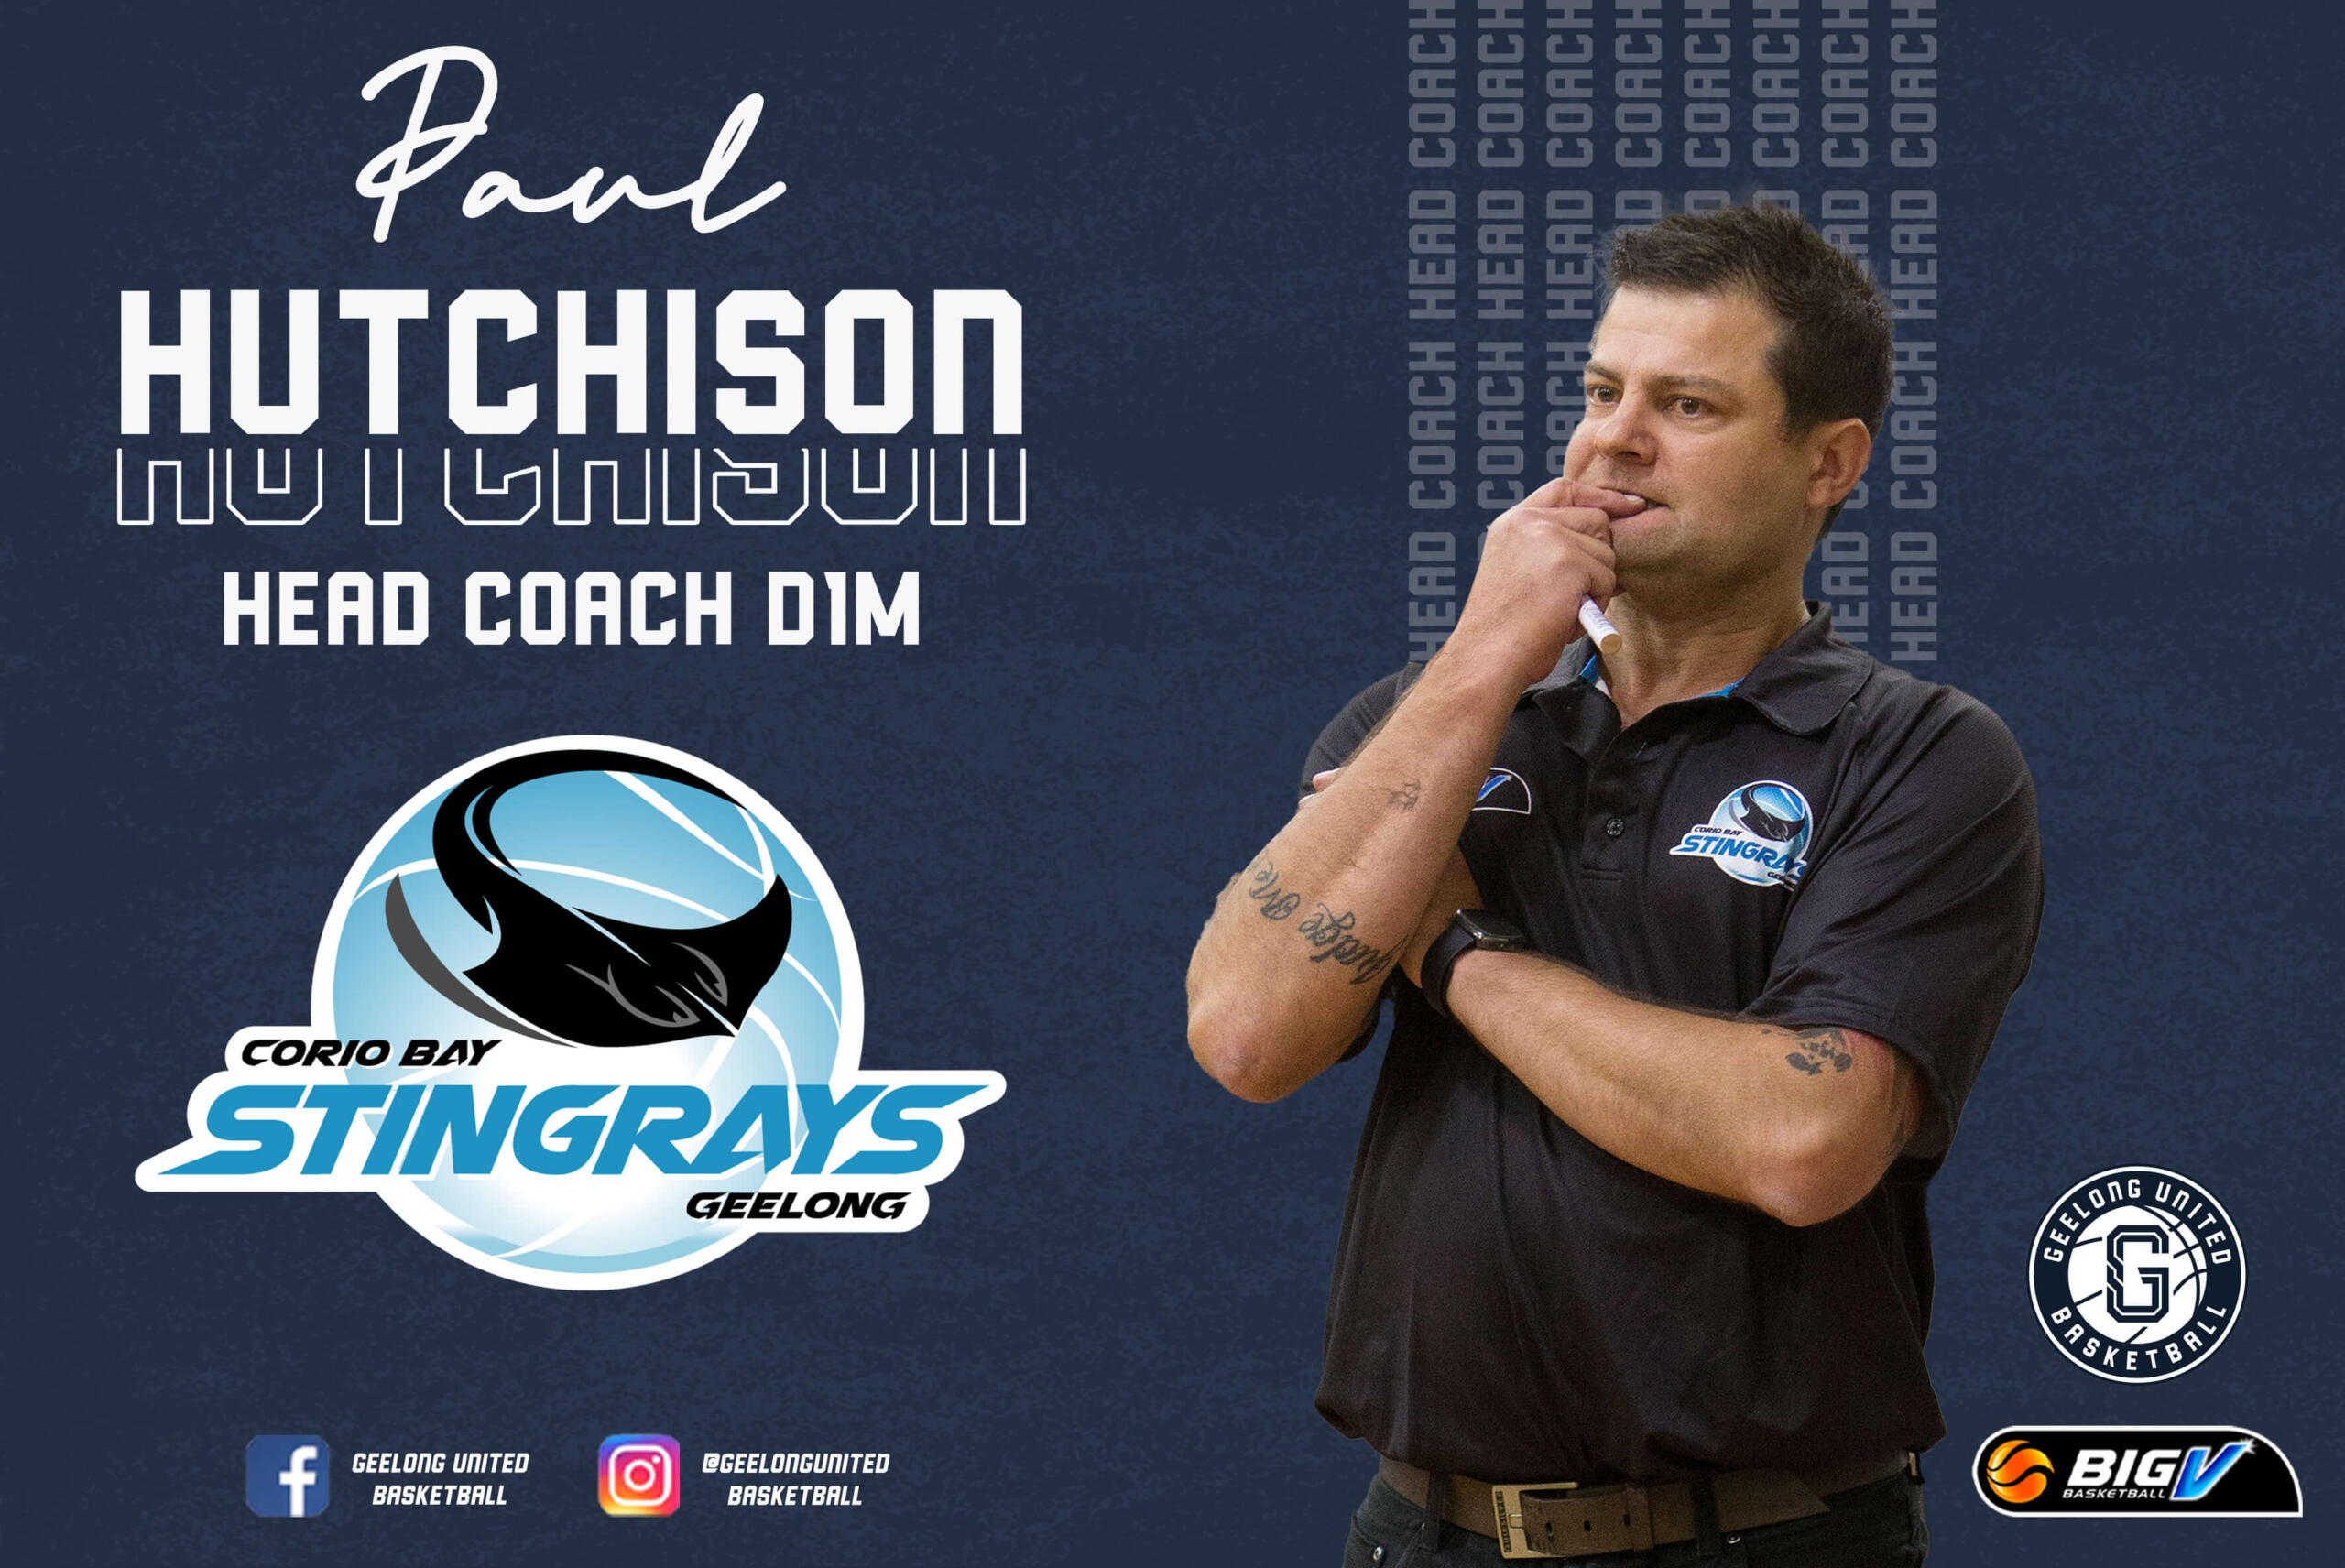 Paul-hutchison-head-coach-graphic (1)